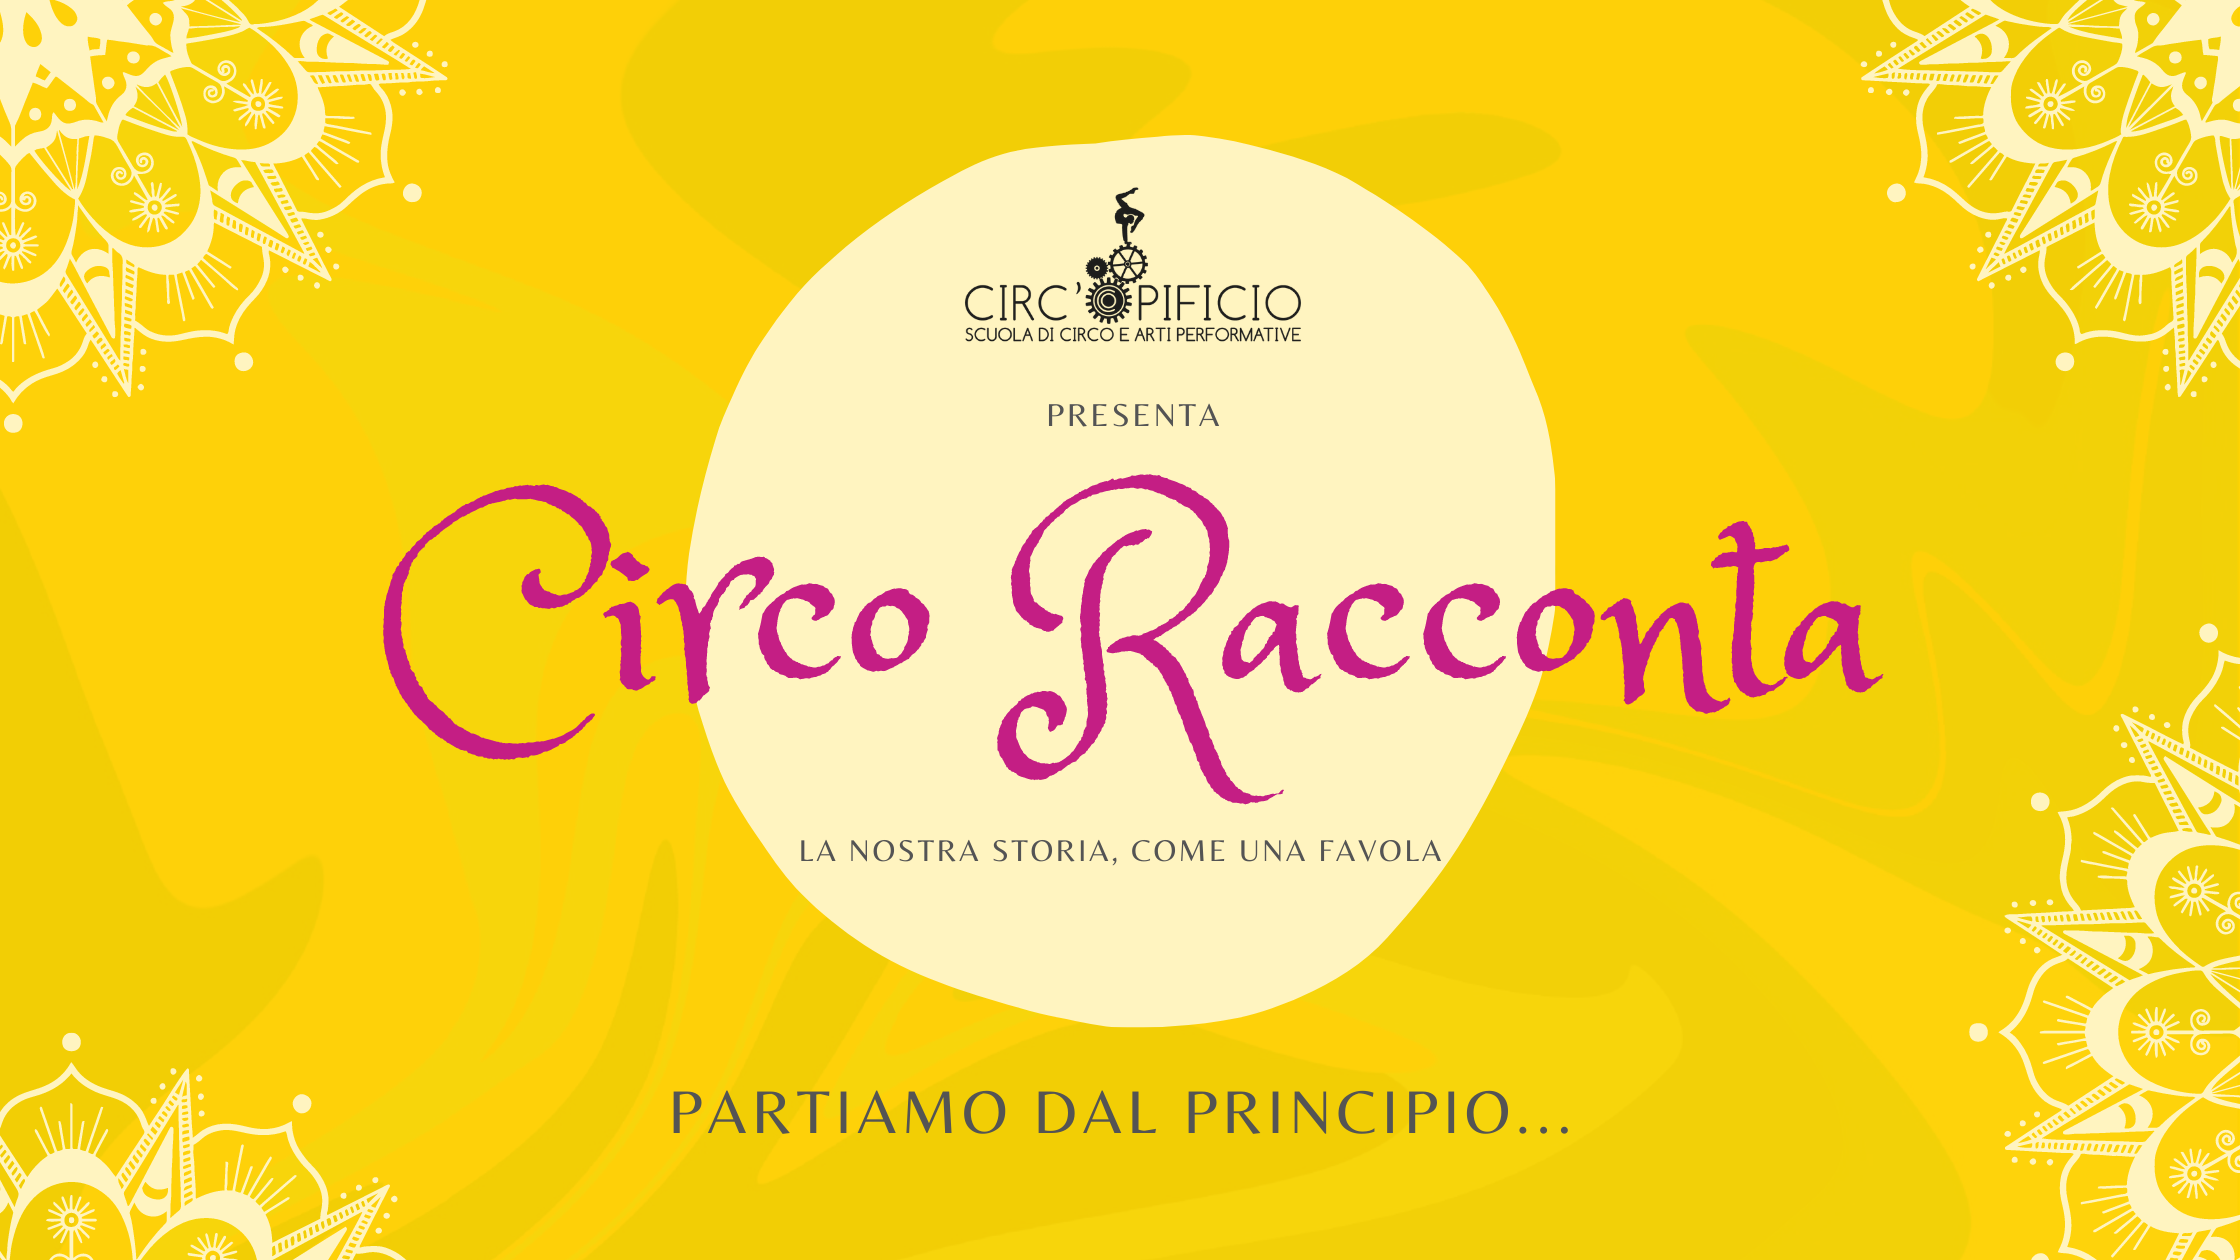 https://www.circopificio.it/wp-content/uploads/2020/11/Circo-Racconta-1.png